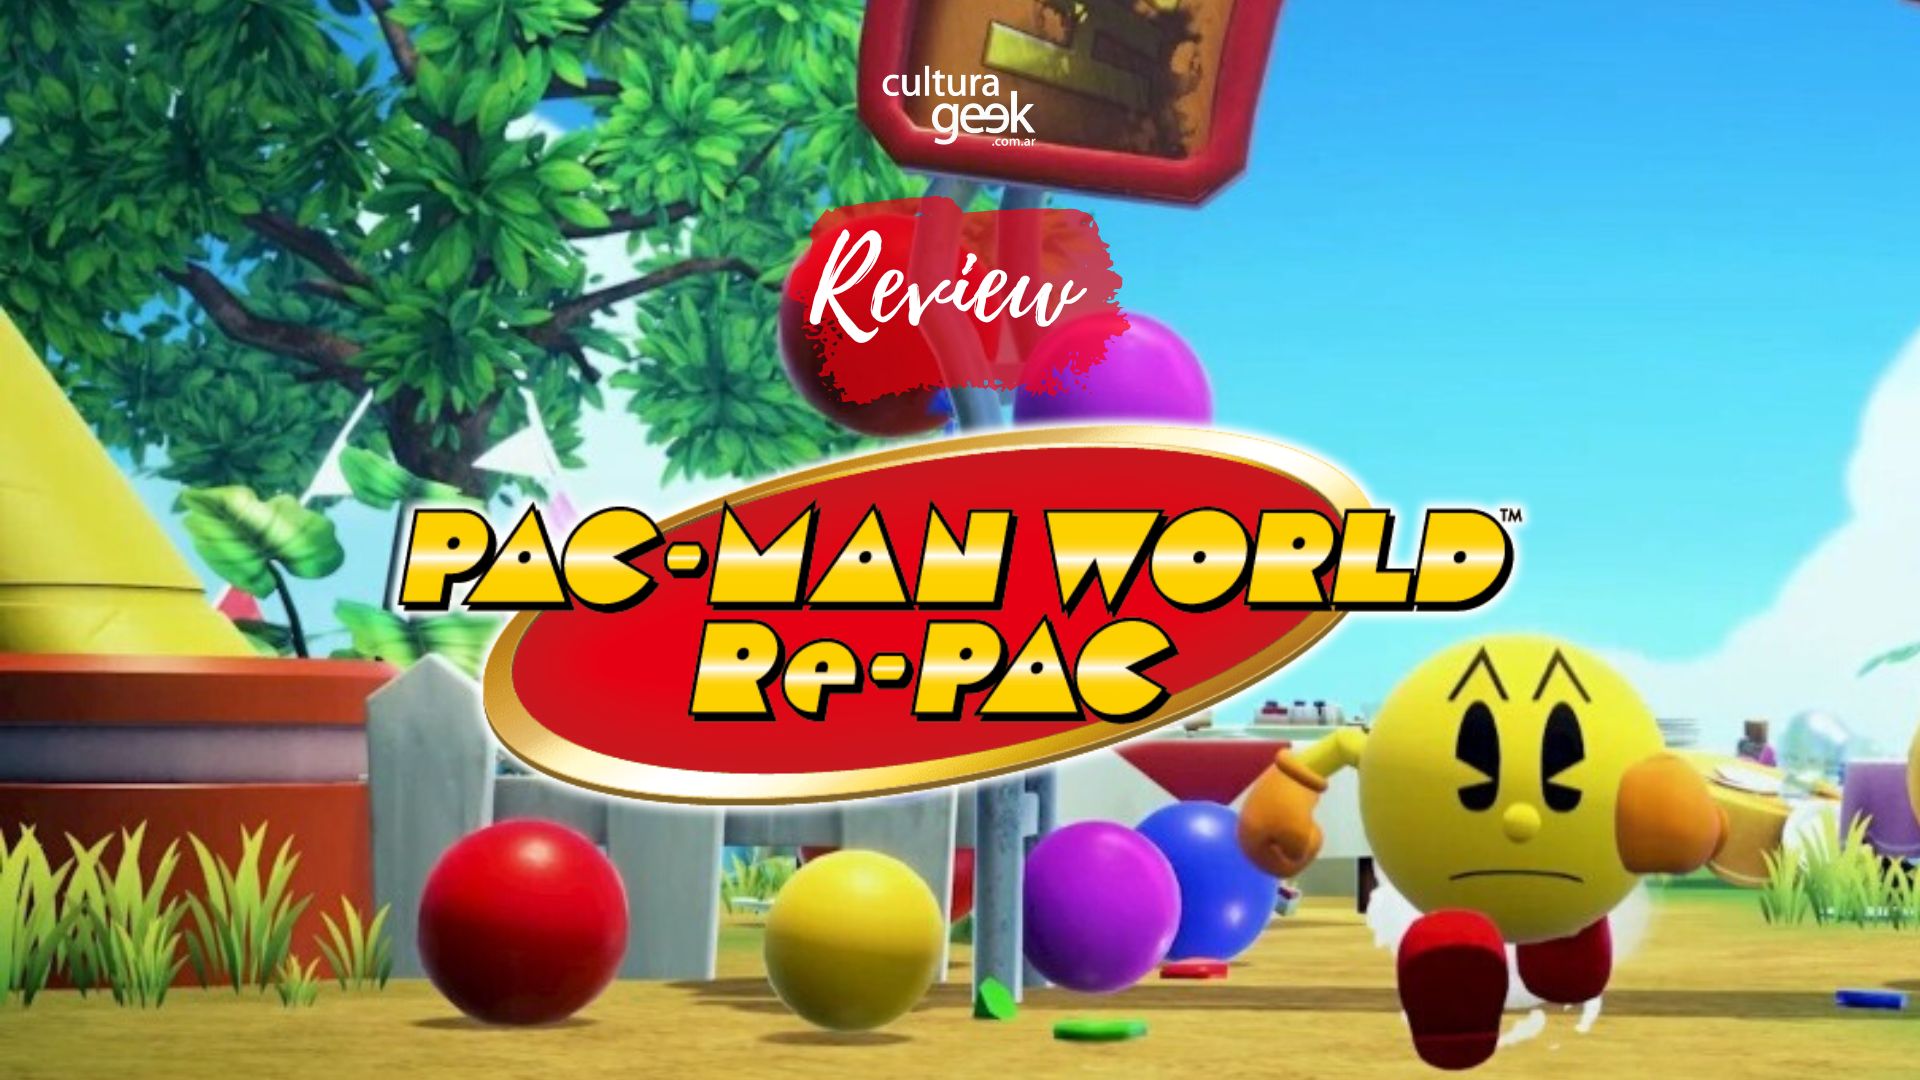 Pac-man world